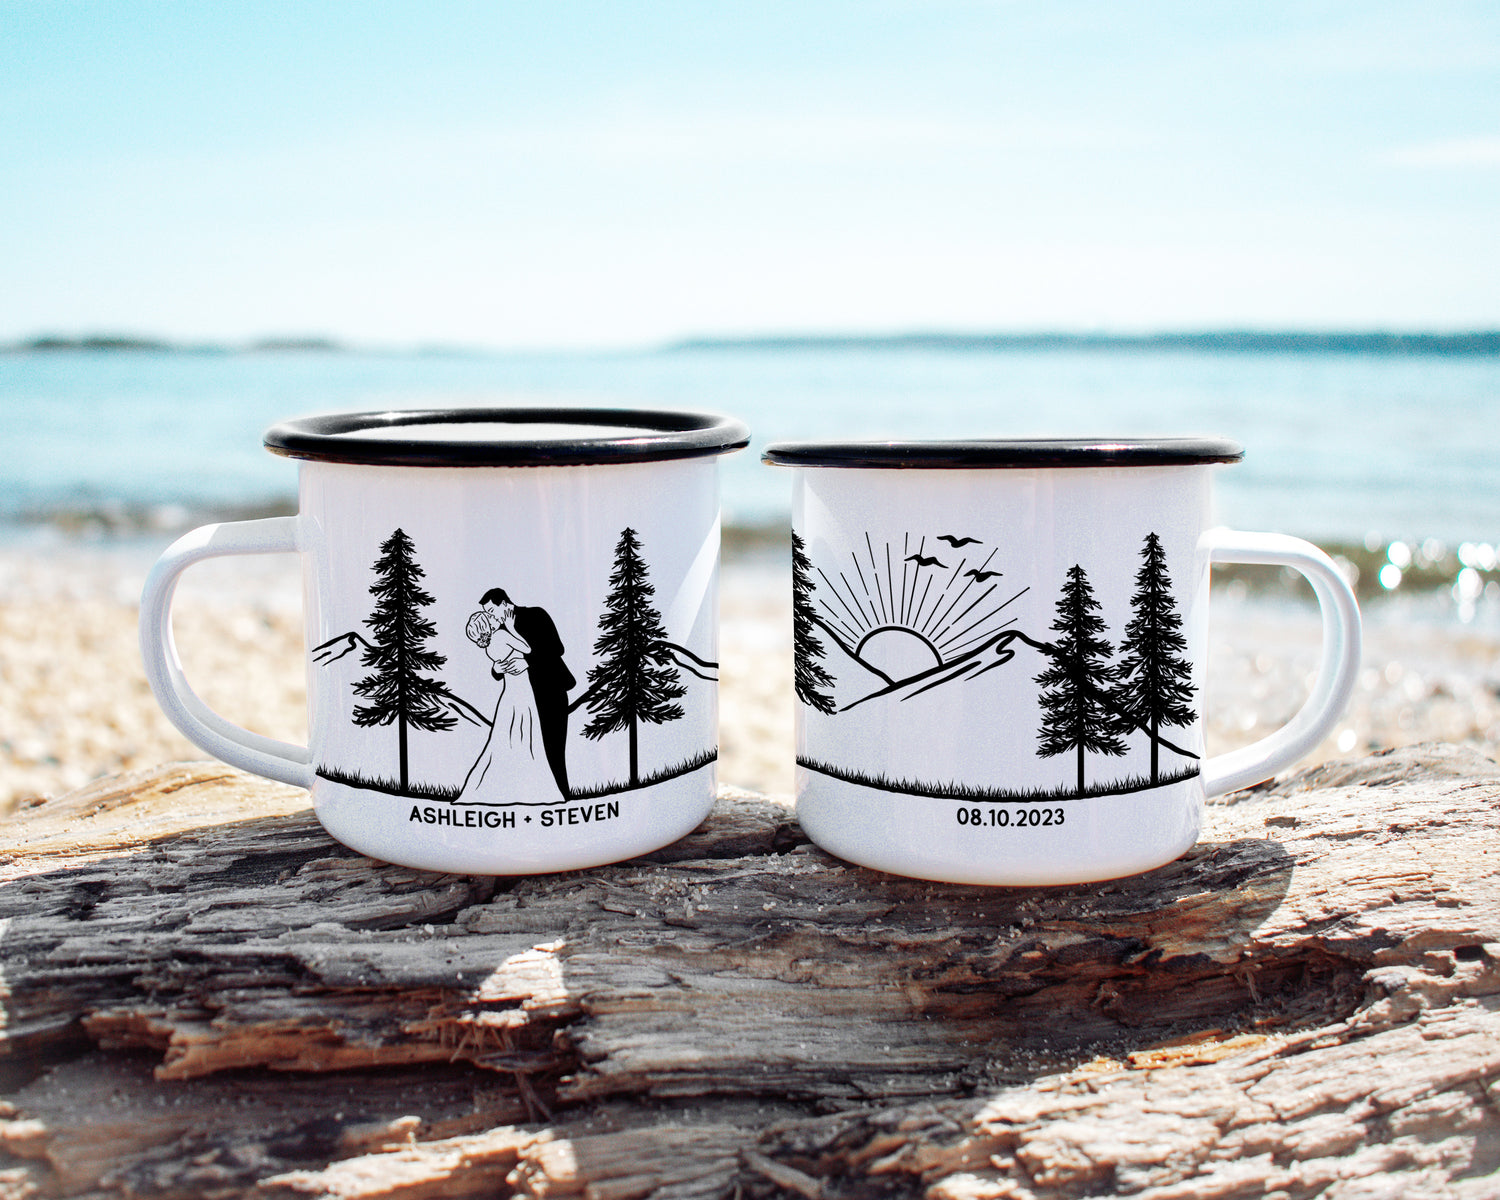 Metal Camp Mug, Custom Personalized Camping Mug With Your Design